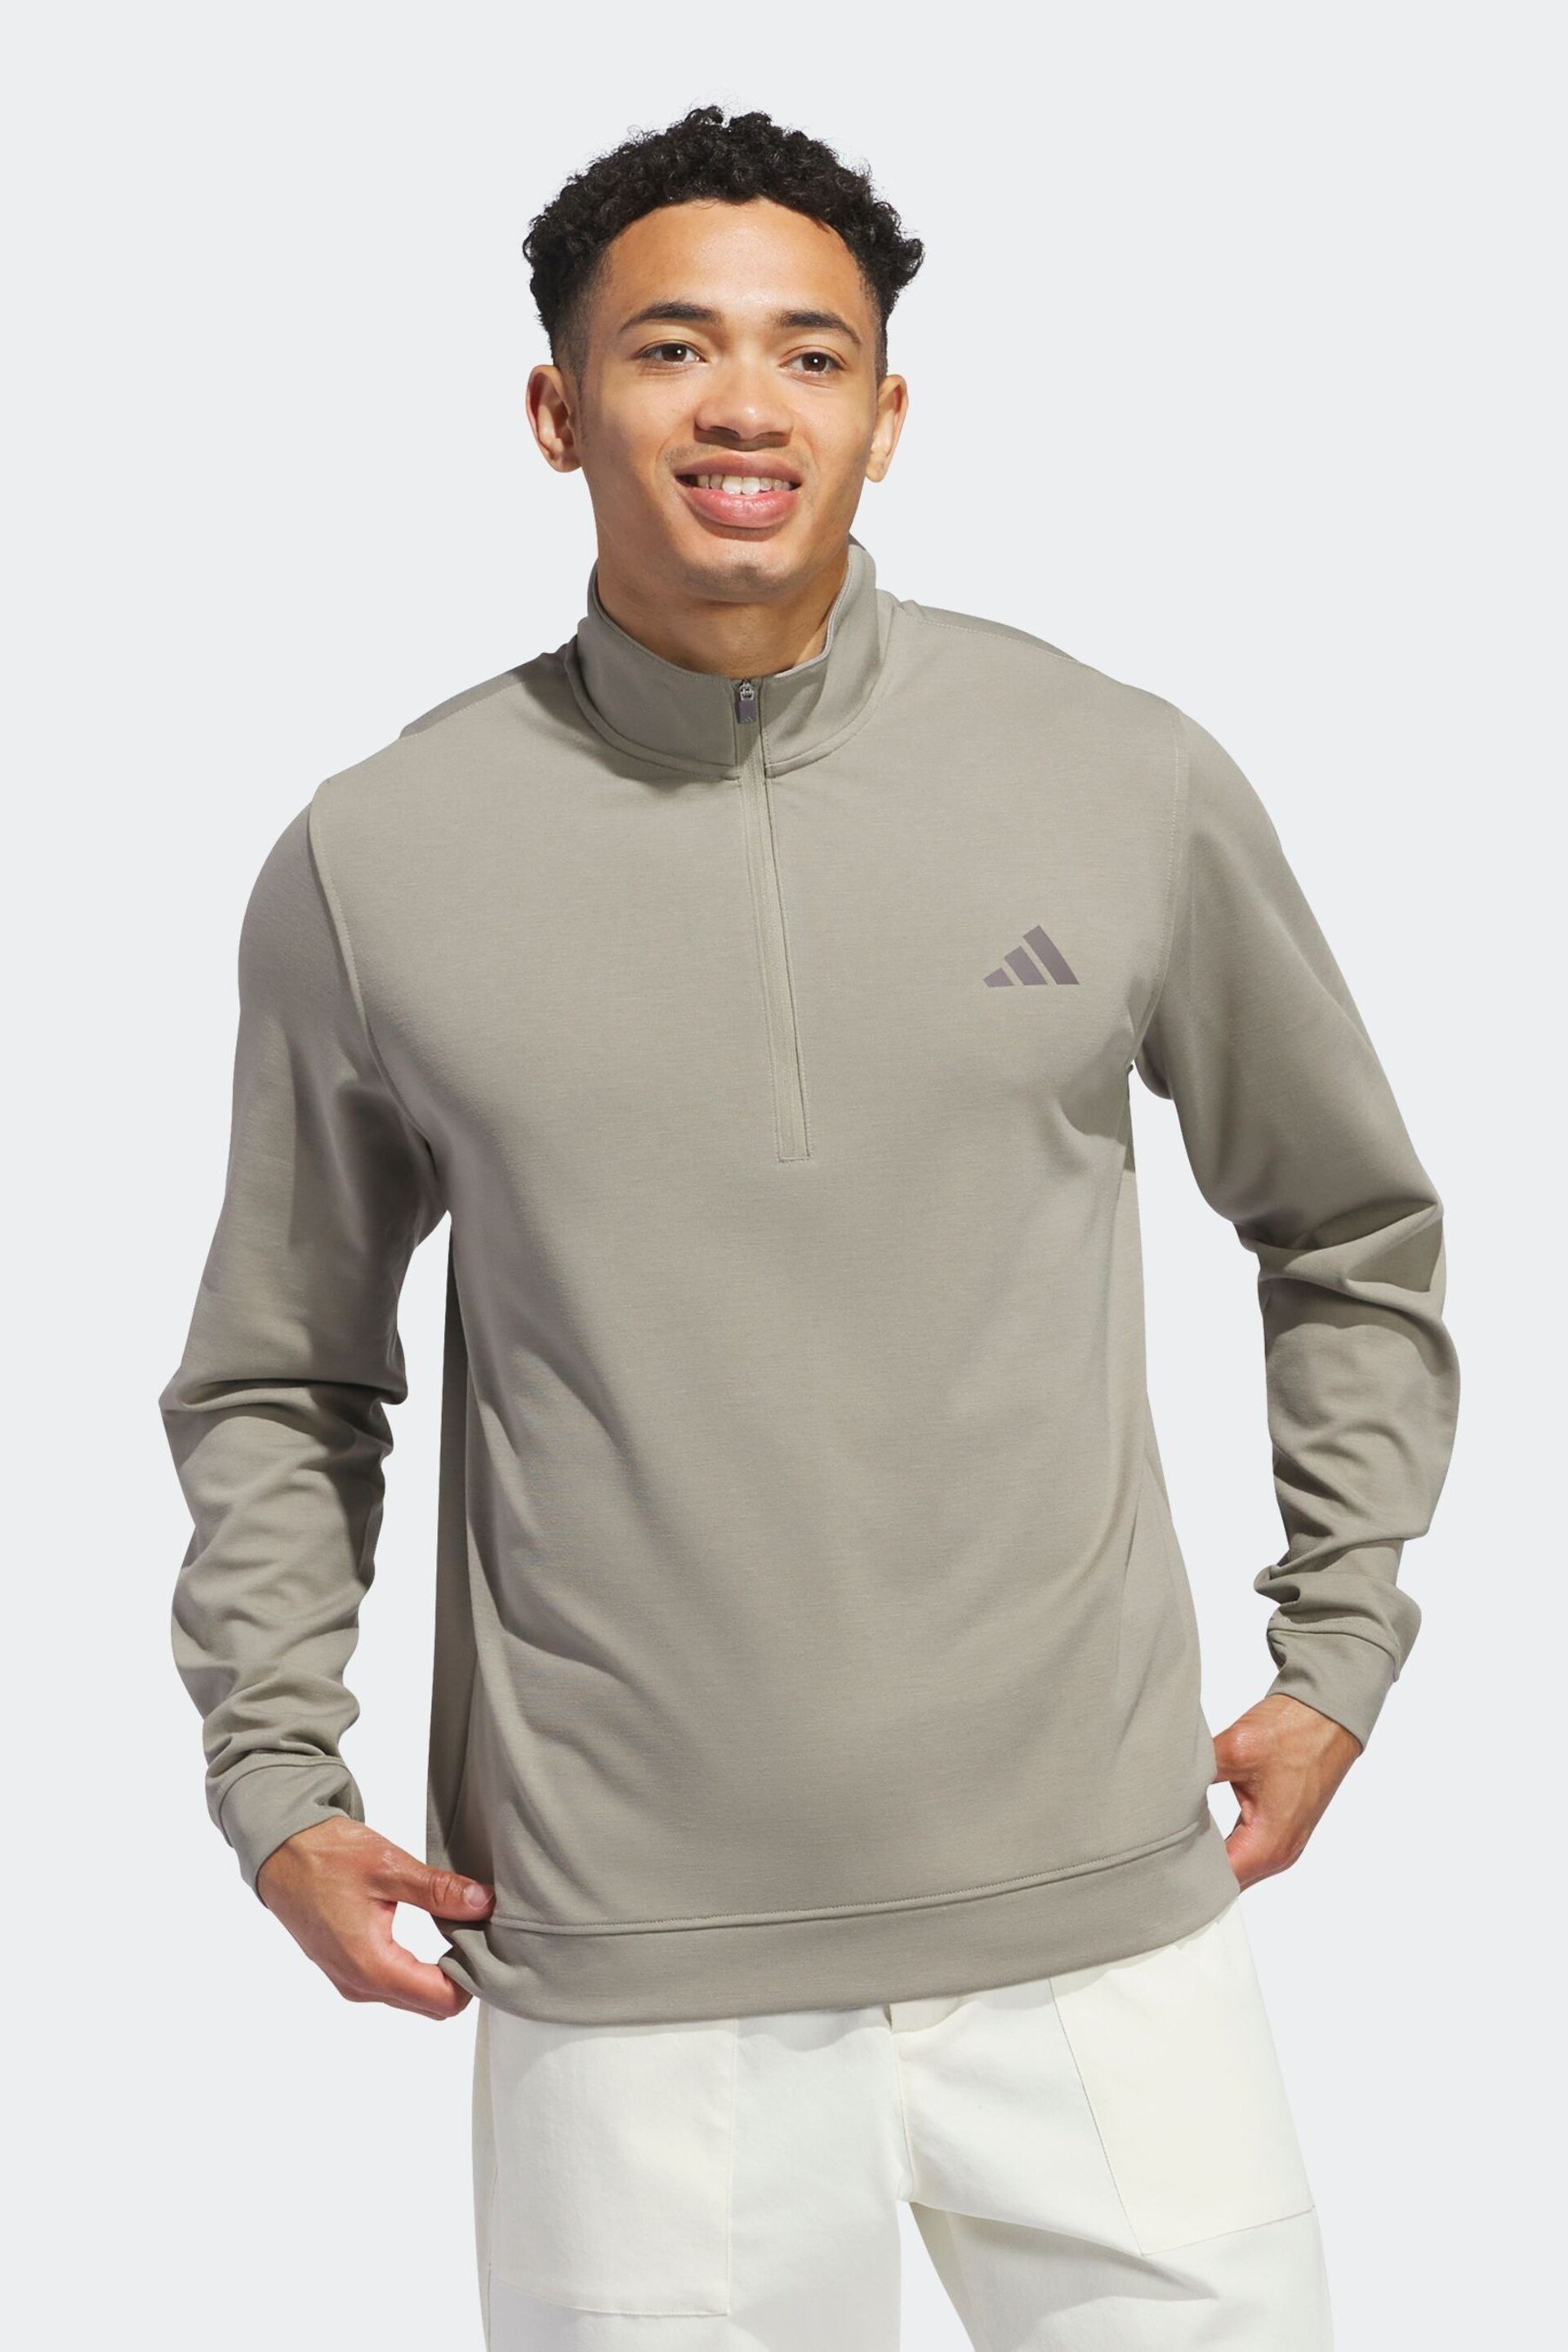 adidas Golf Elevated 1/4-Zip Black Sweatshirt - Image 1 of 7